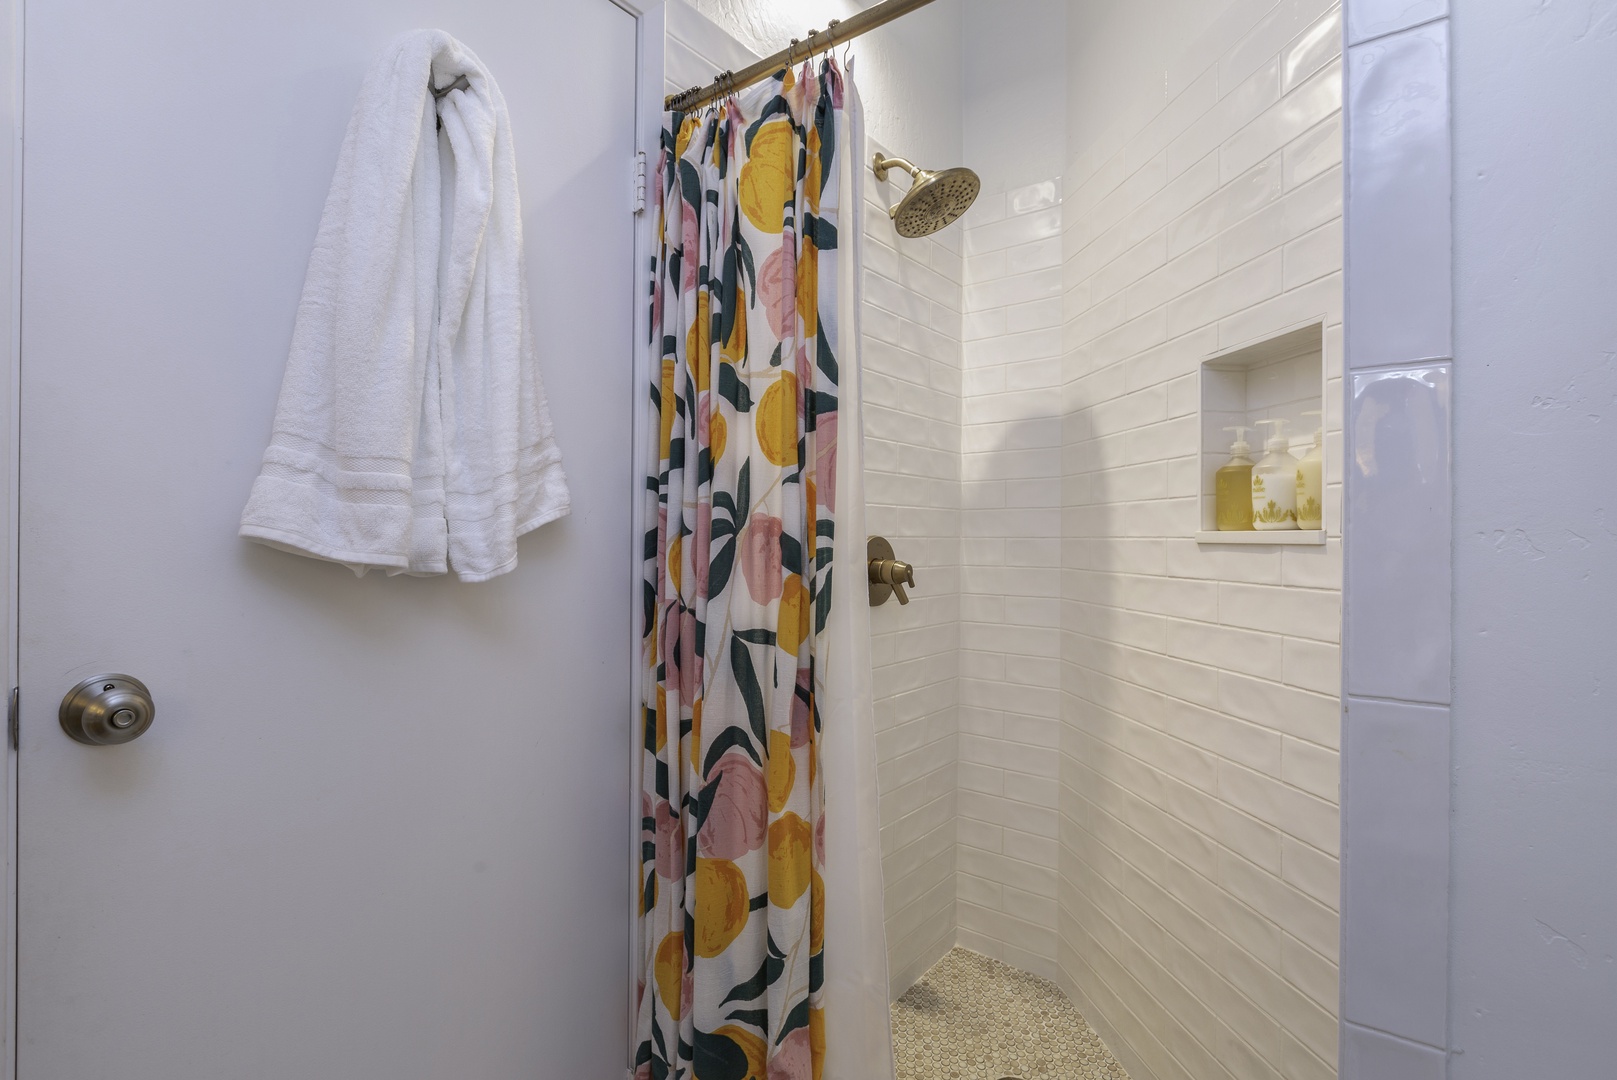 Princeville Vacation Rentals, Pali Ke Kua 207 - Walk-in shower in the guest bathroom